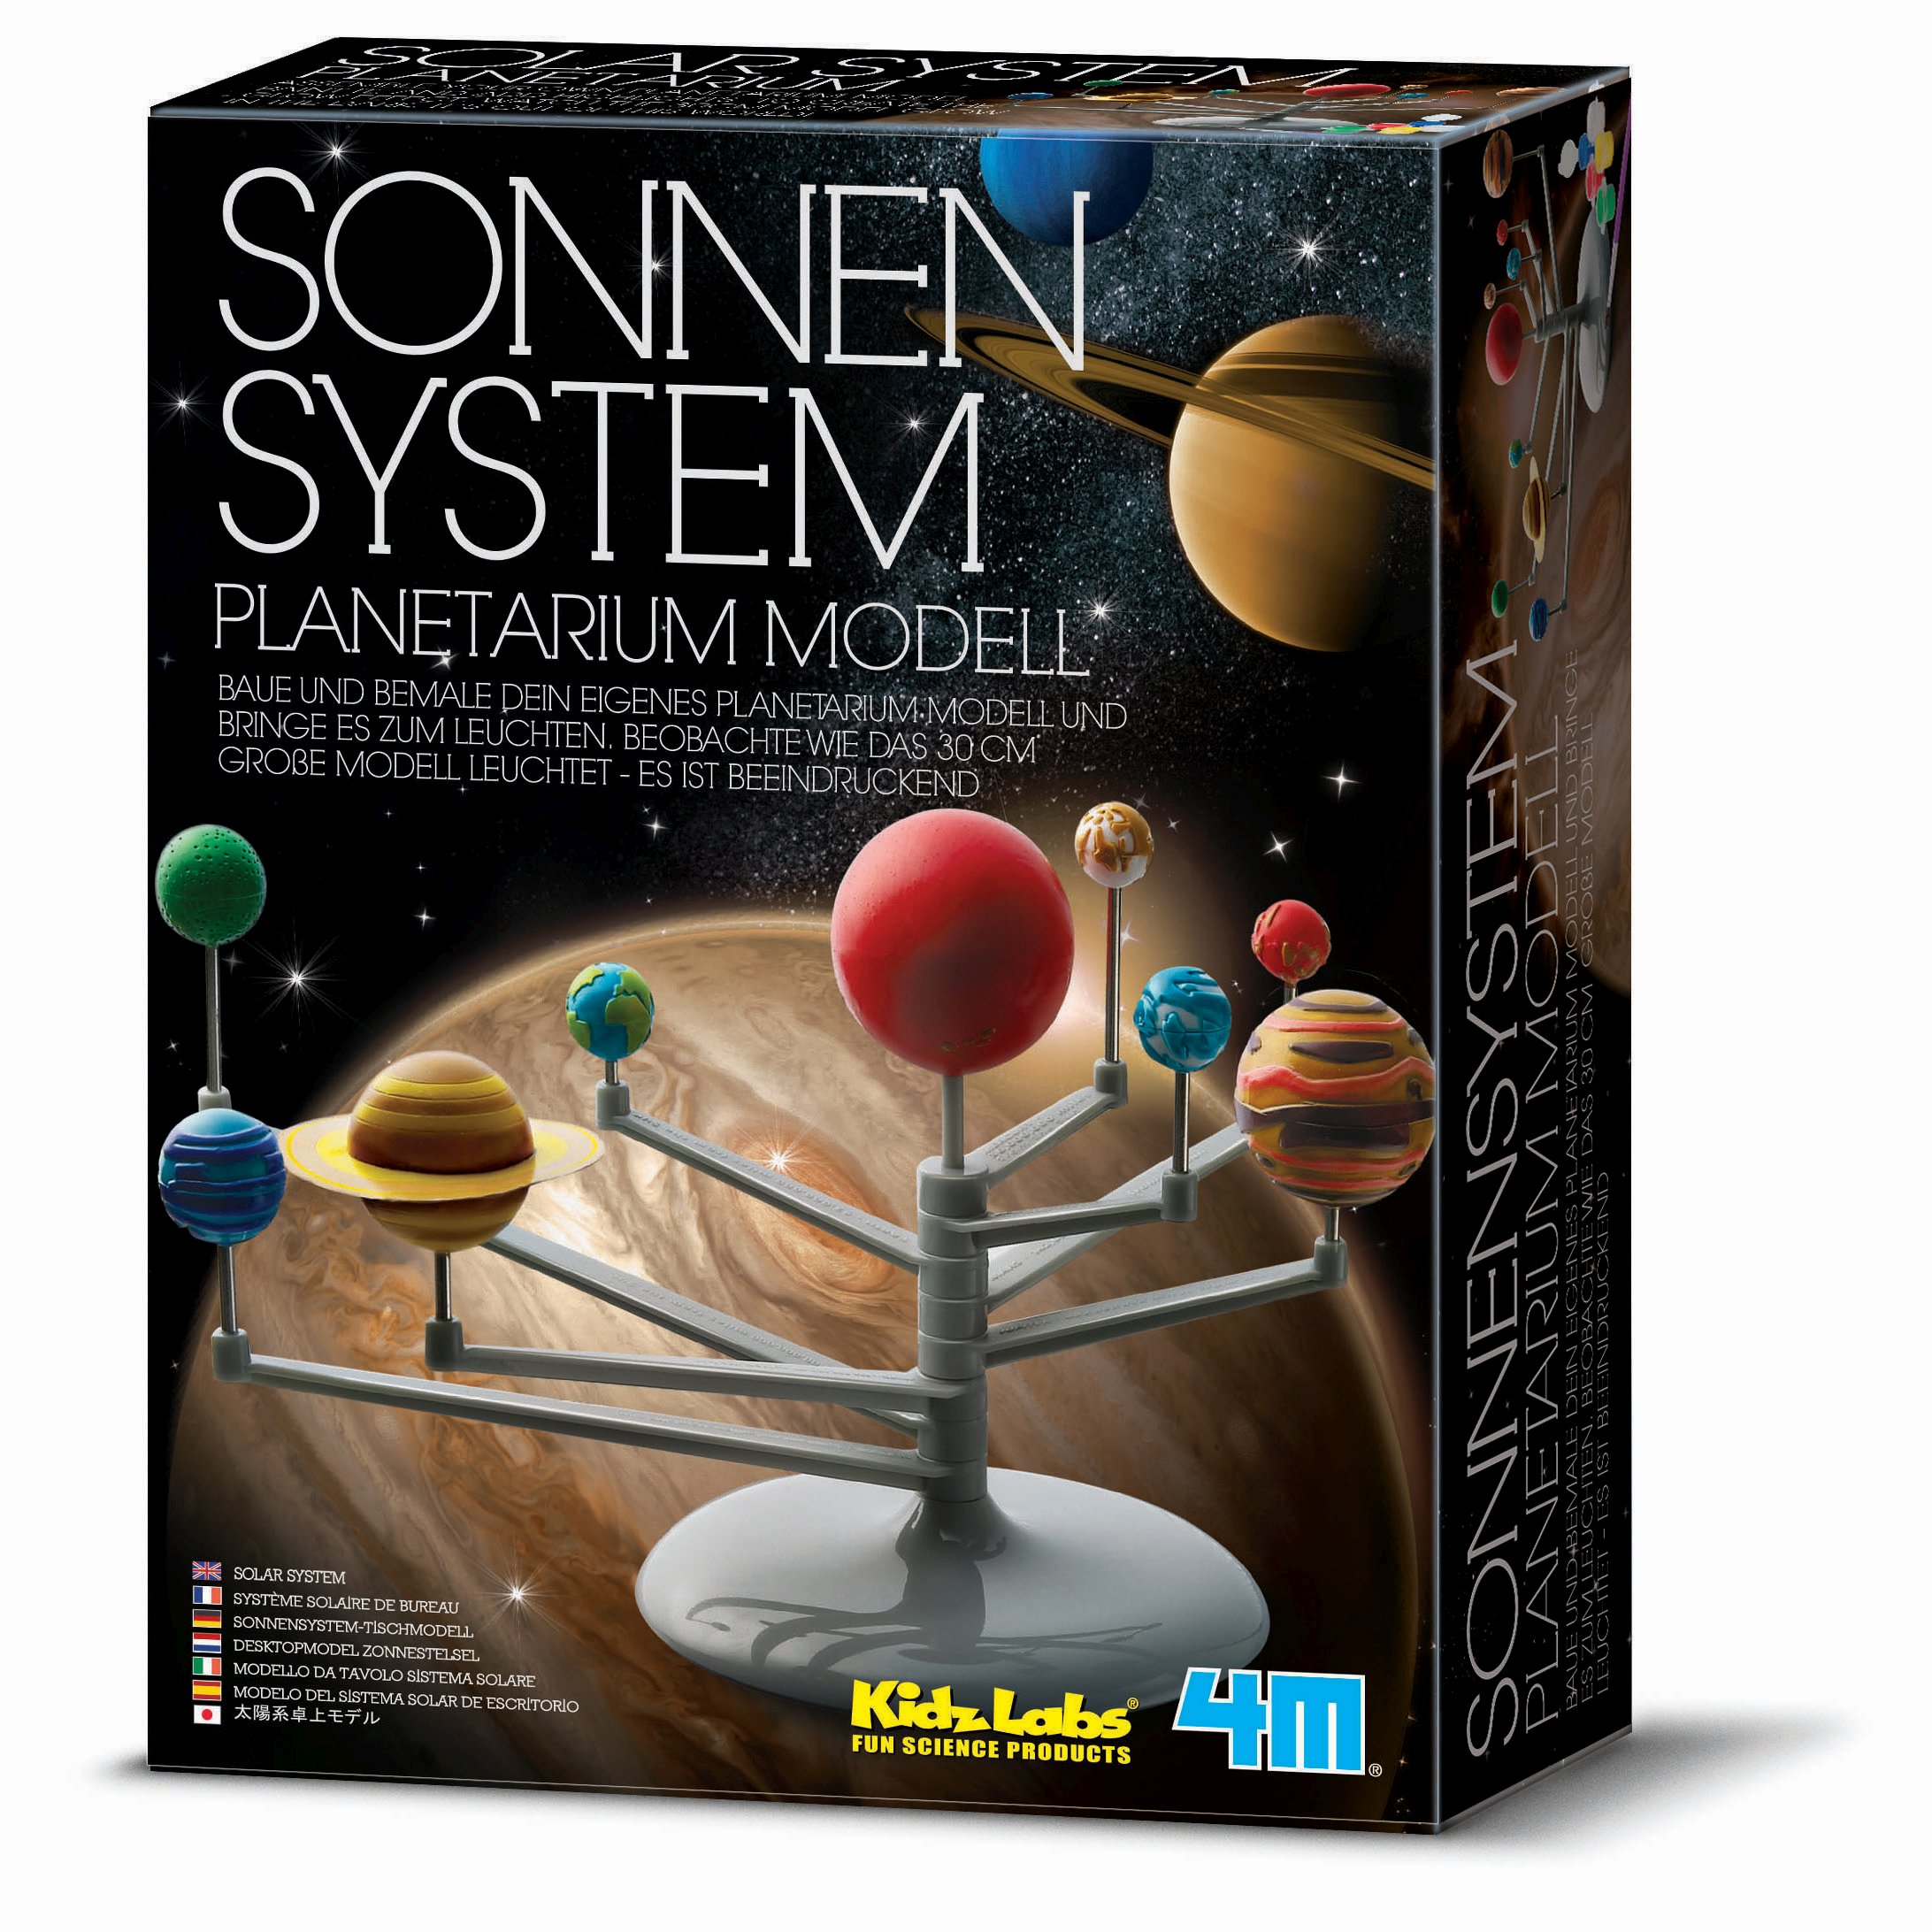 KidzLabs Planetarium Modell - Sonnensystem